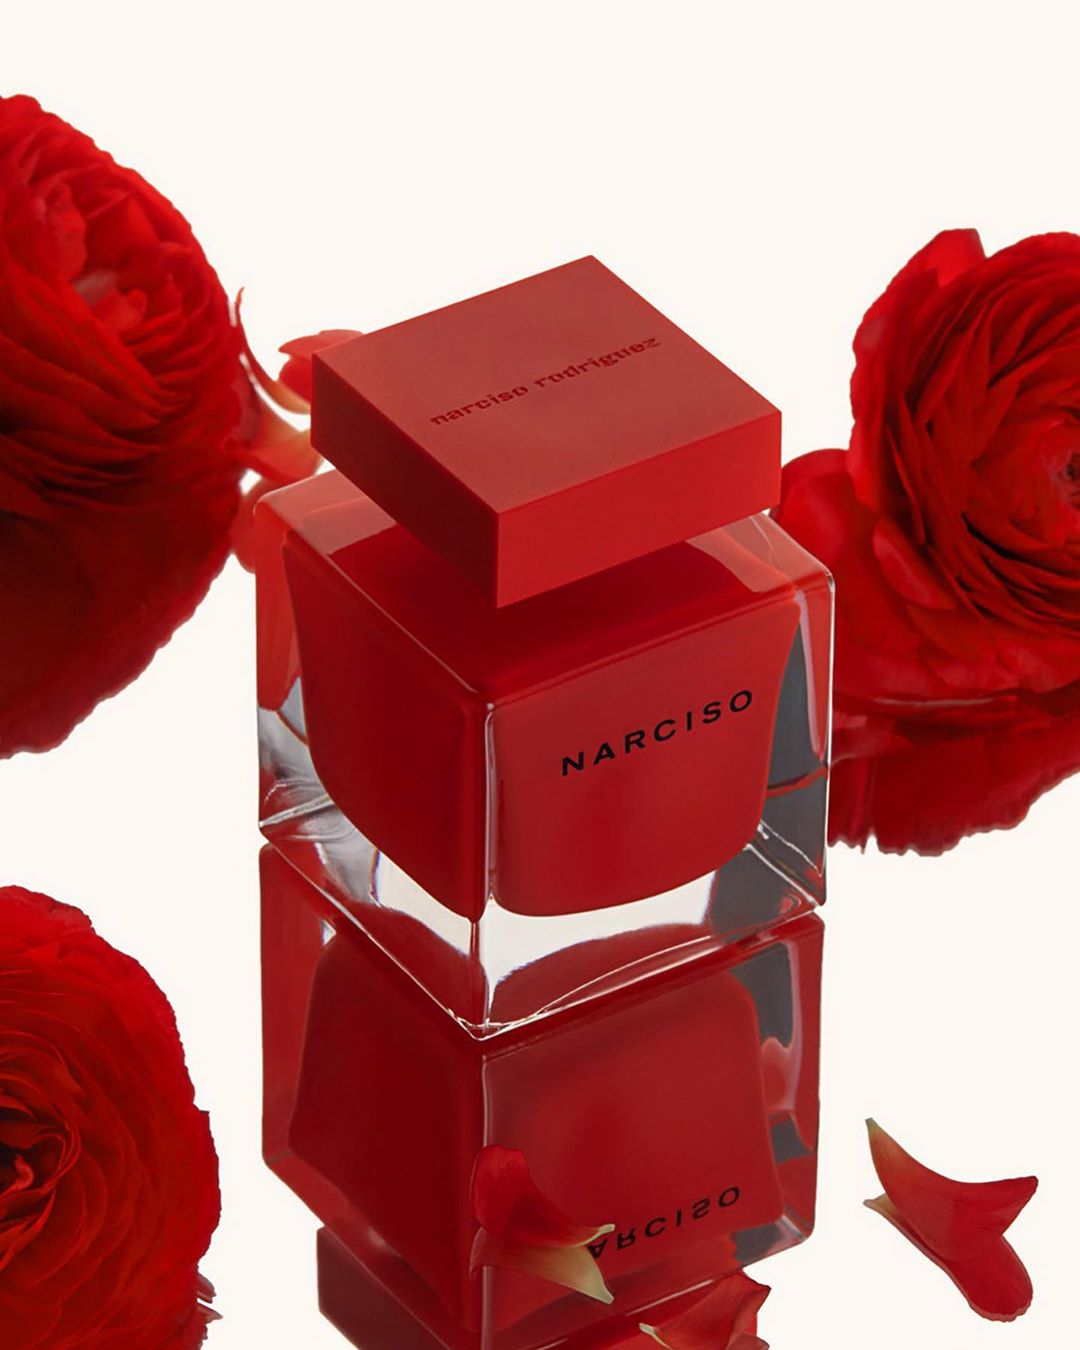 narciso rodriguez - NARCISO eau de parfum rouge: the fierce power of attraction.
#myrouge #narcisorouge #narcisorodriguezparfums #parfum #fragrance